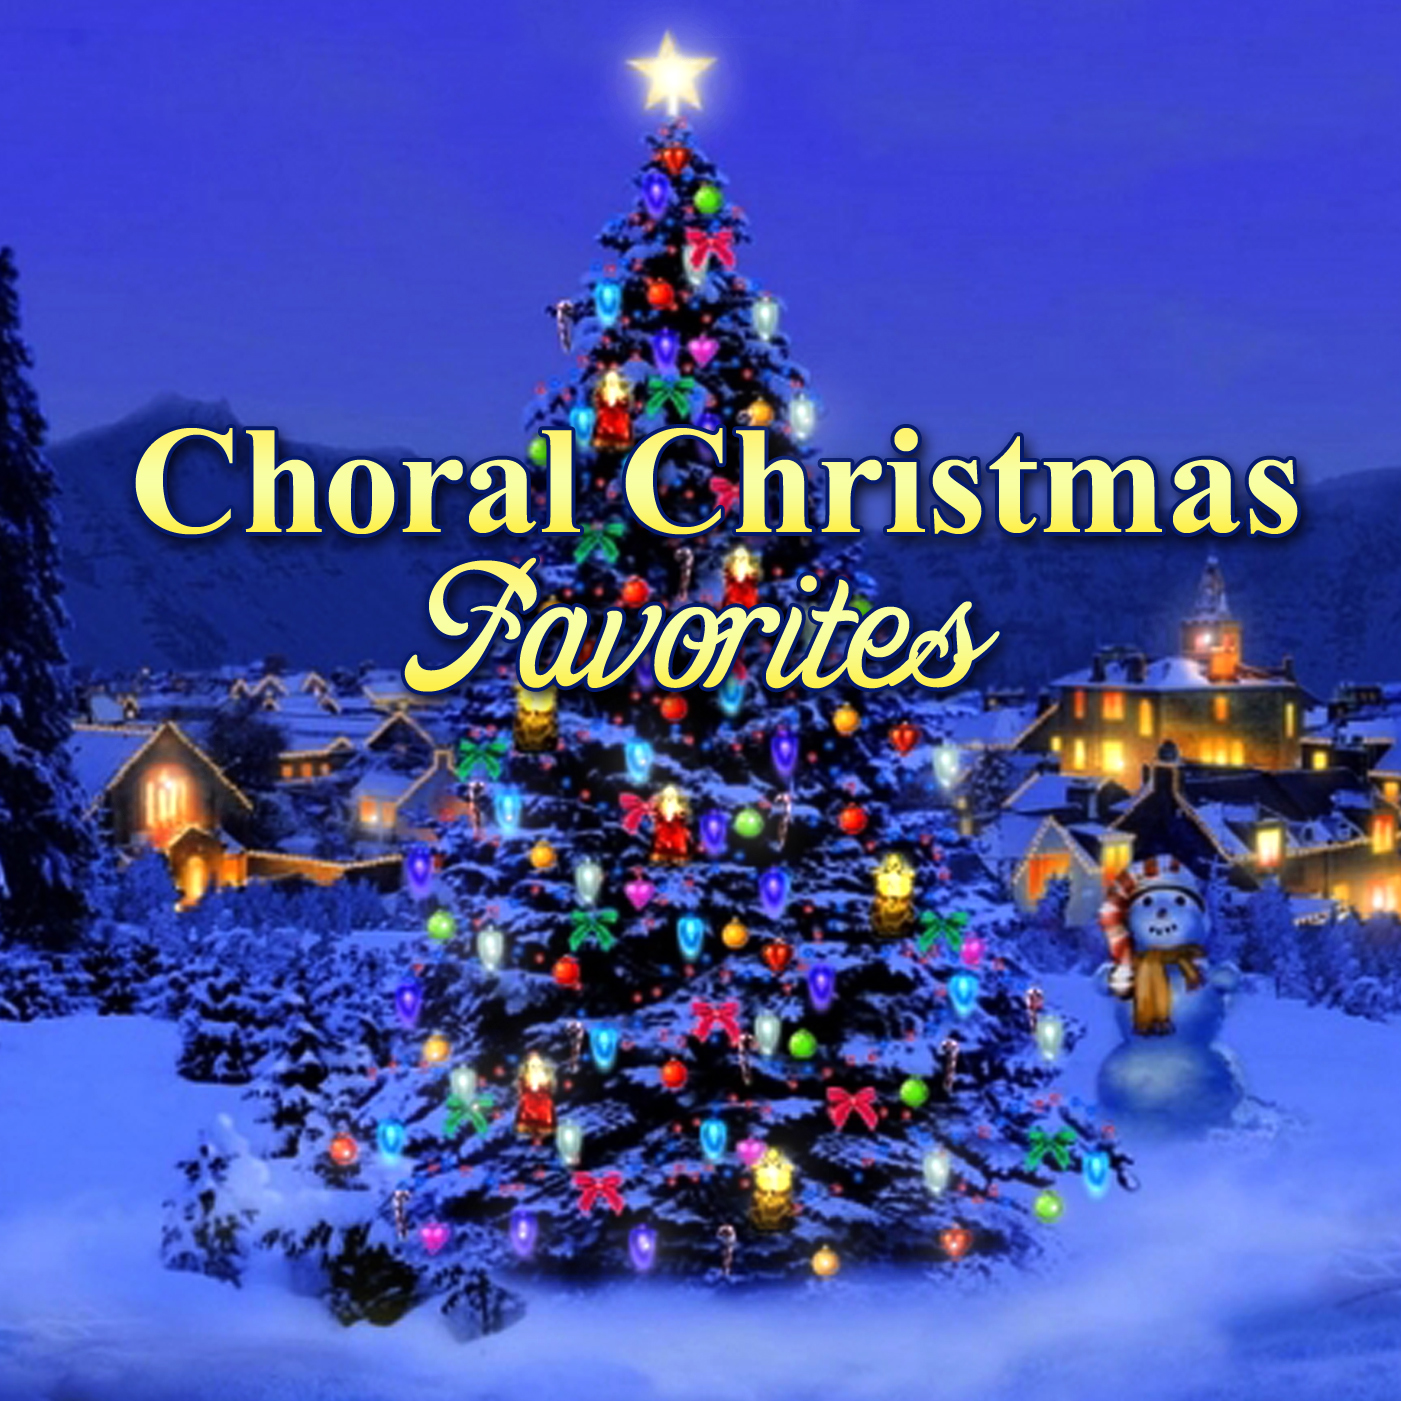 Choral Christmas Favorites